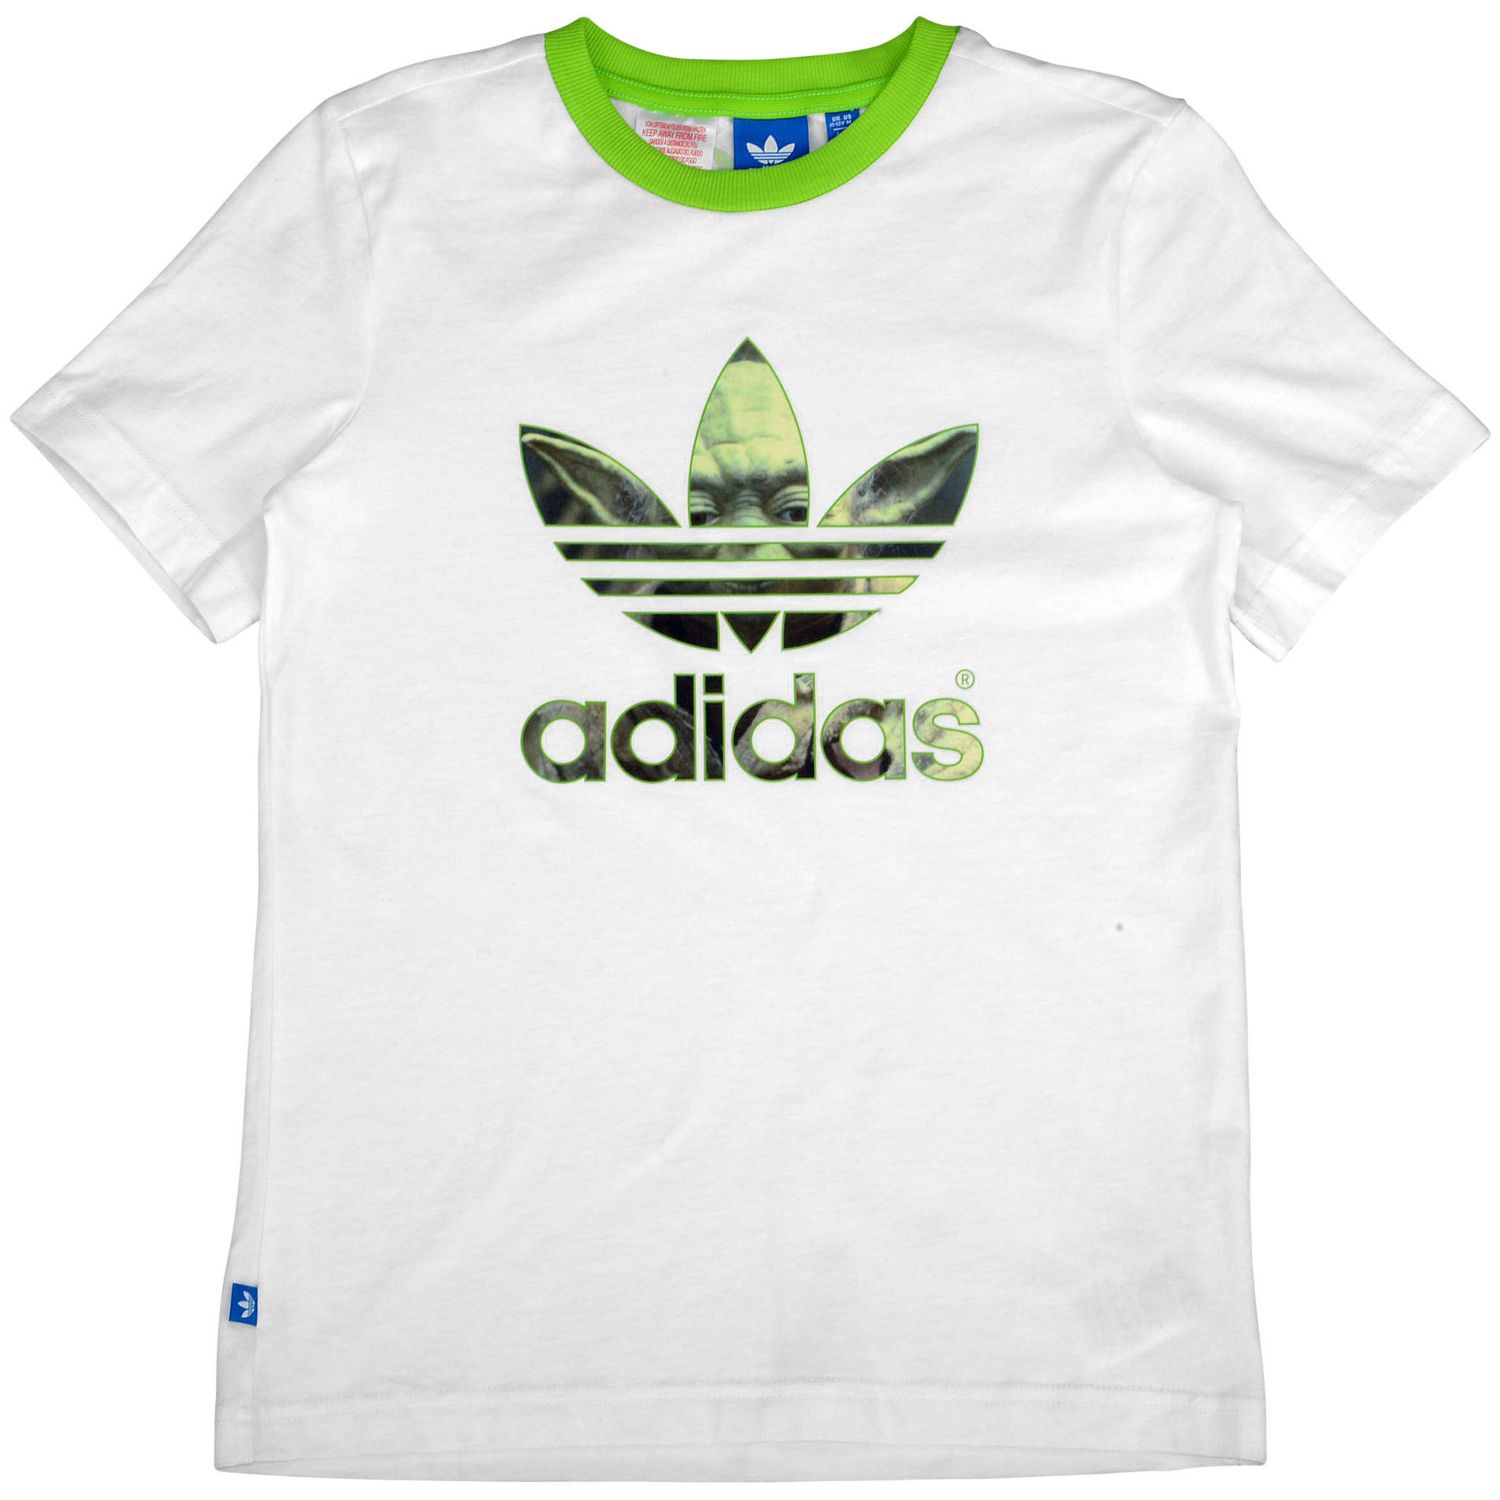 Adidas Camiseta Niño Star Wars Yoda (blanco/verde)